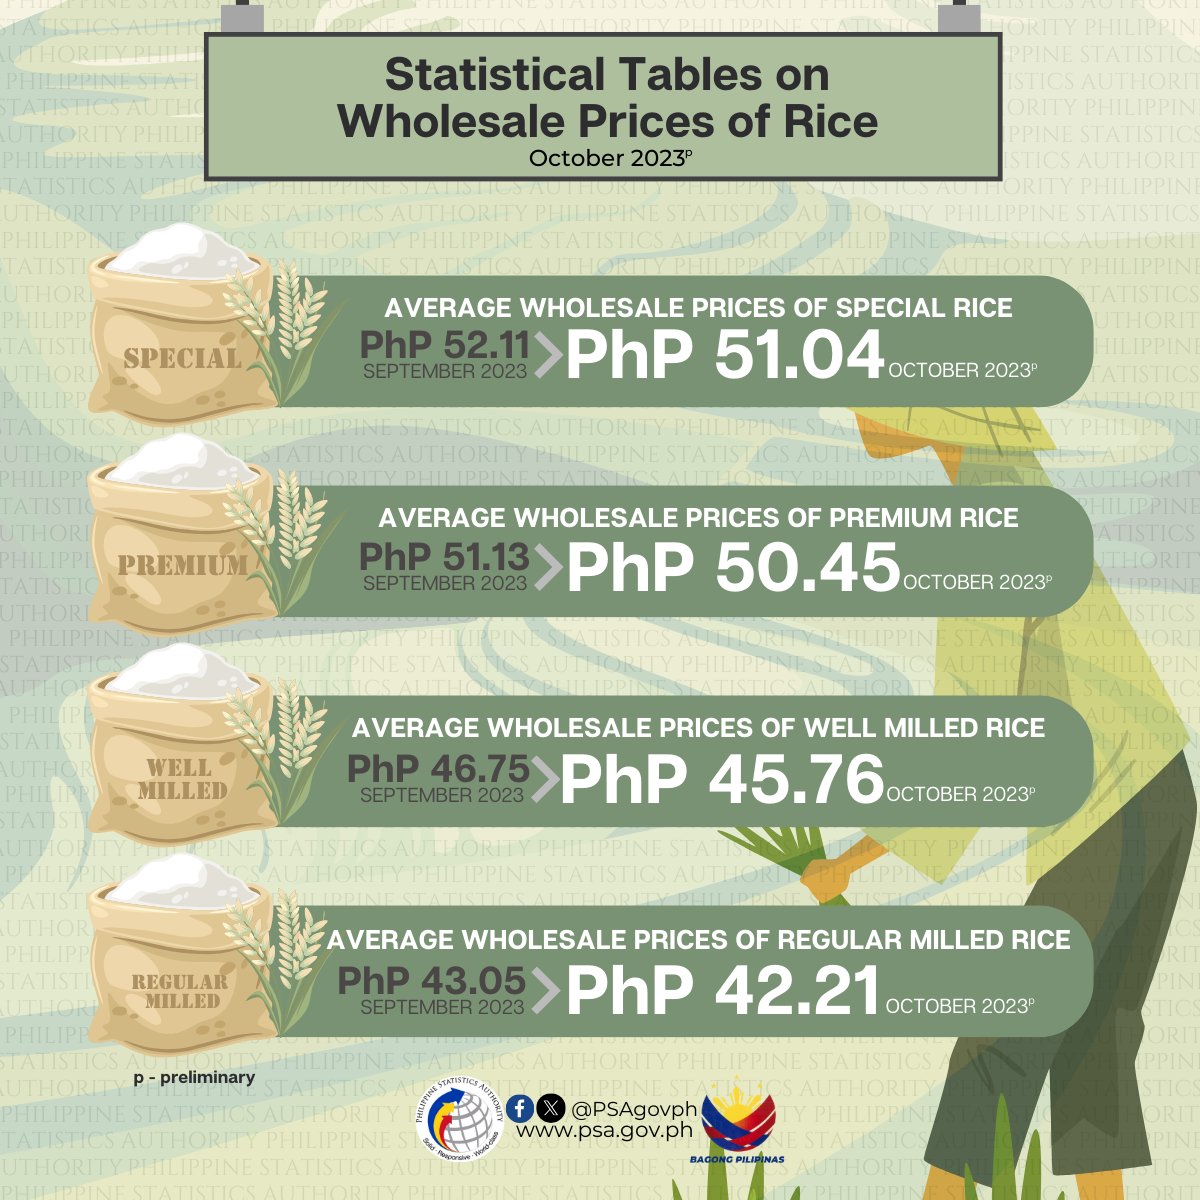 Node, Philippine Statistics Authority